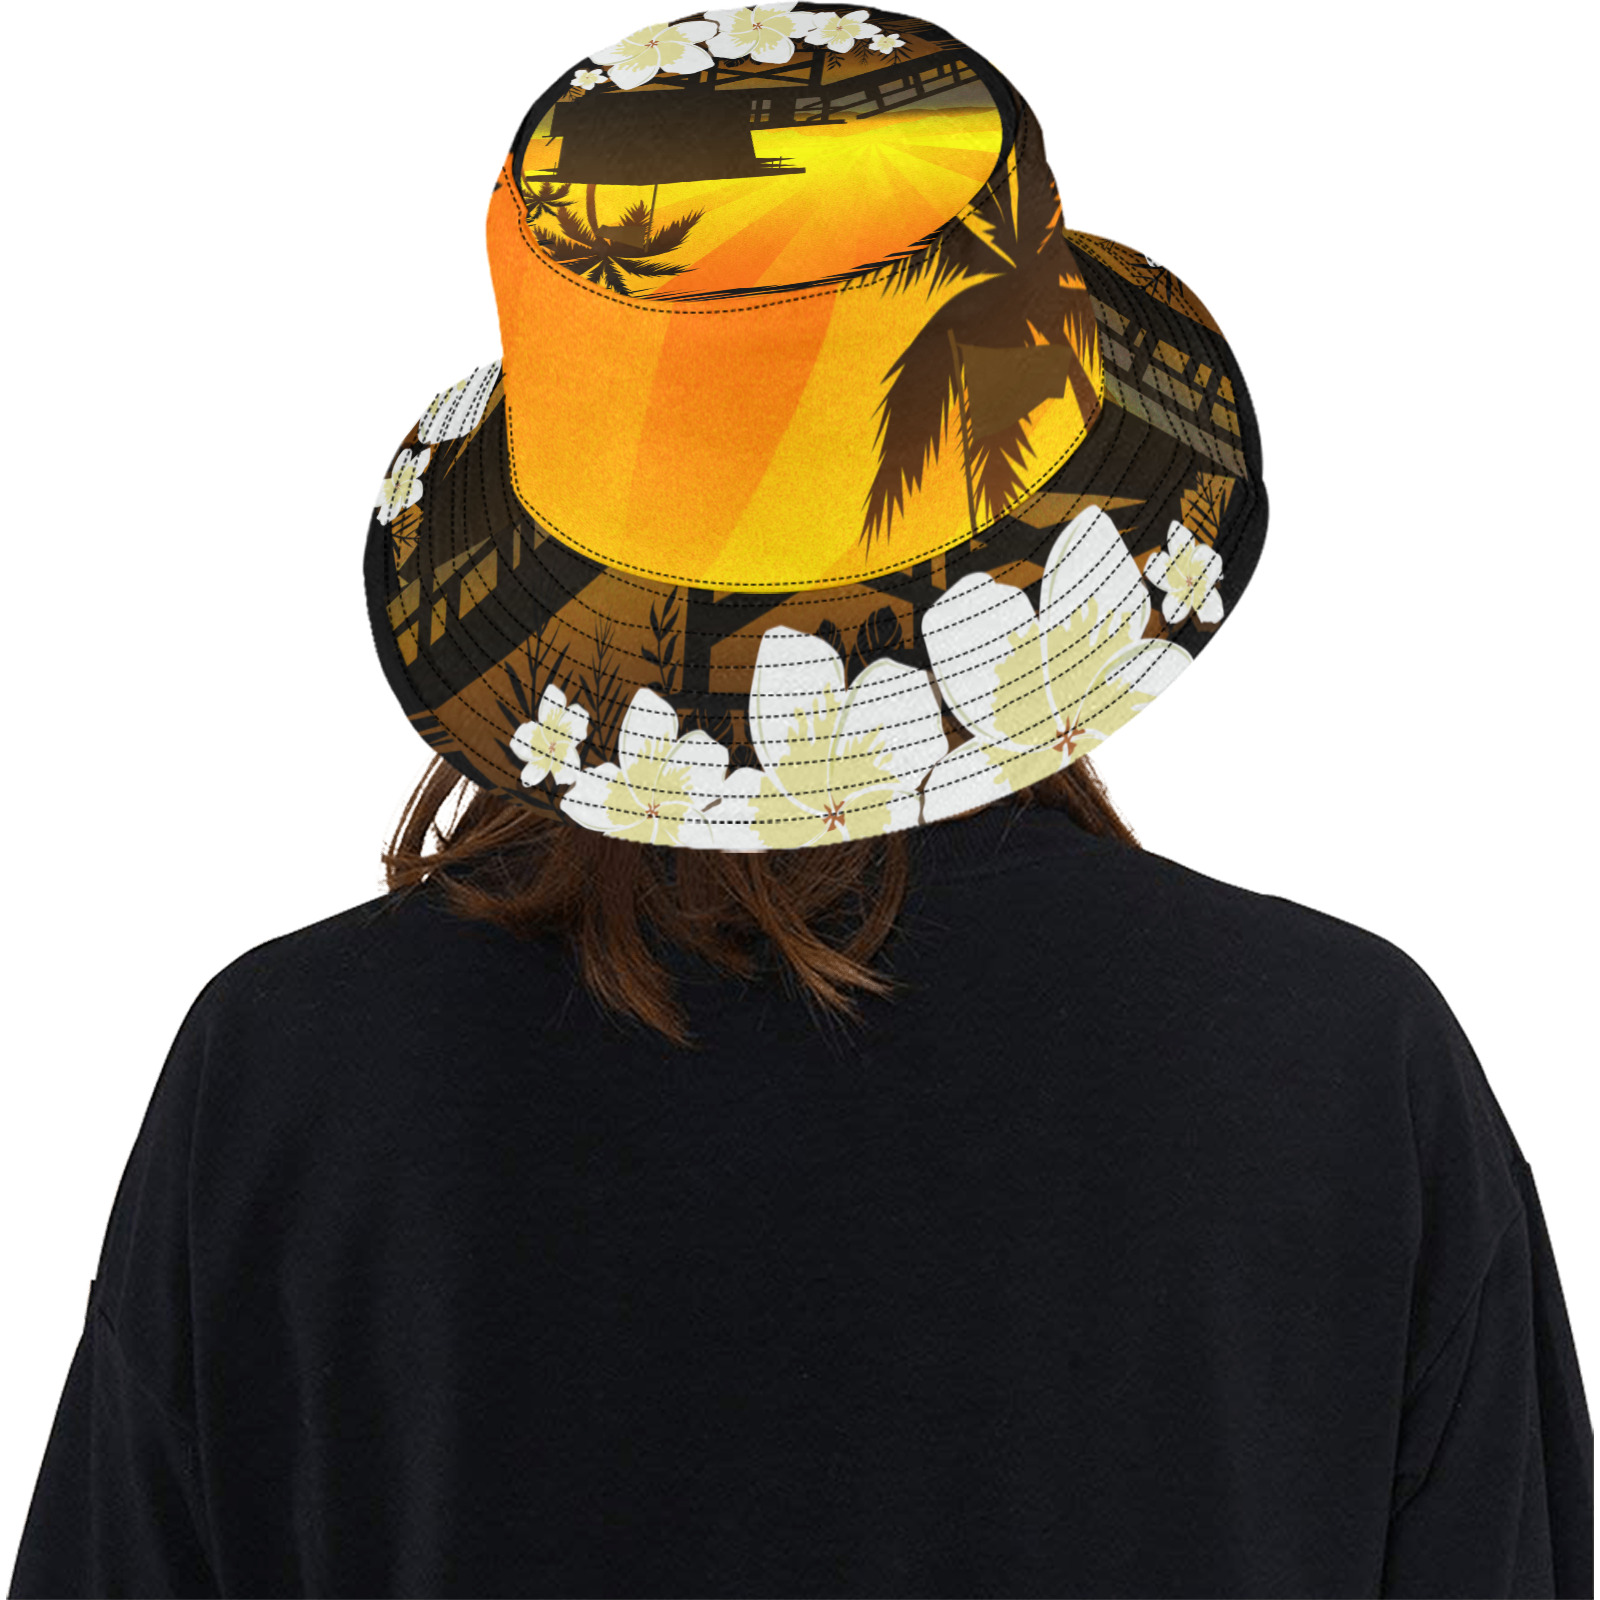 The Beach Life Unisex Summer Bucket Hat